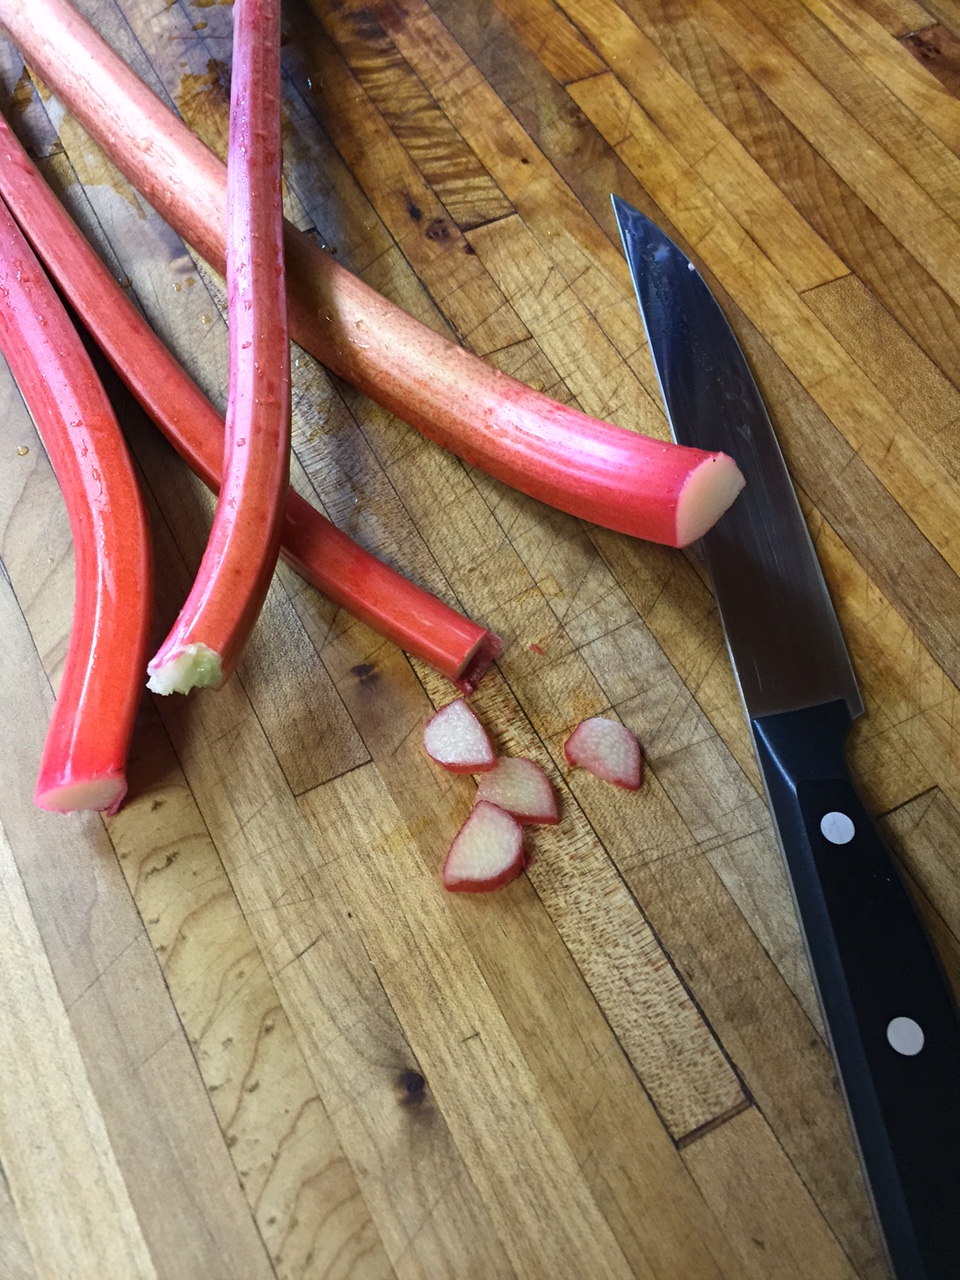 rhubarb and knife on cutting board